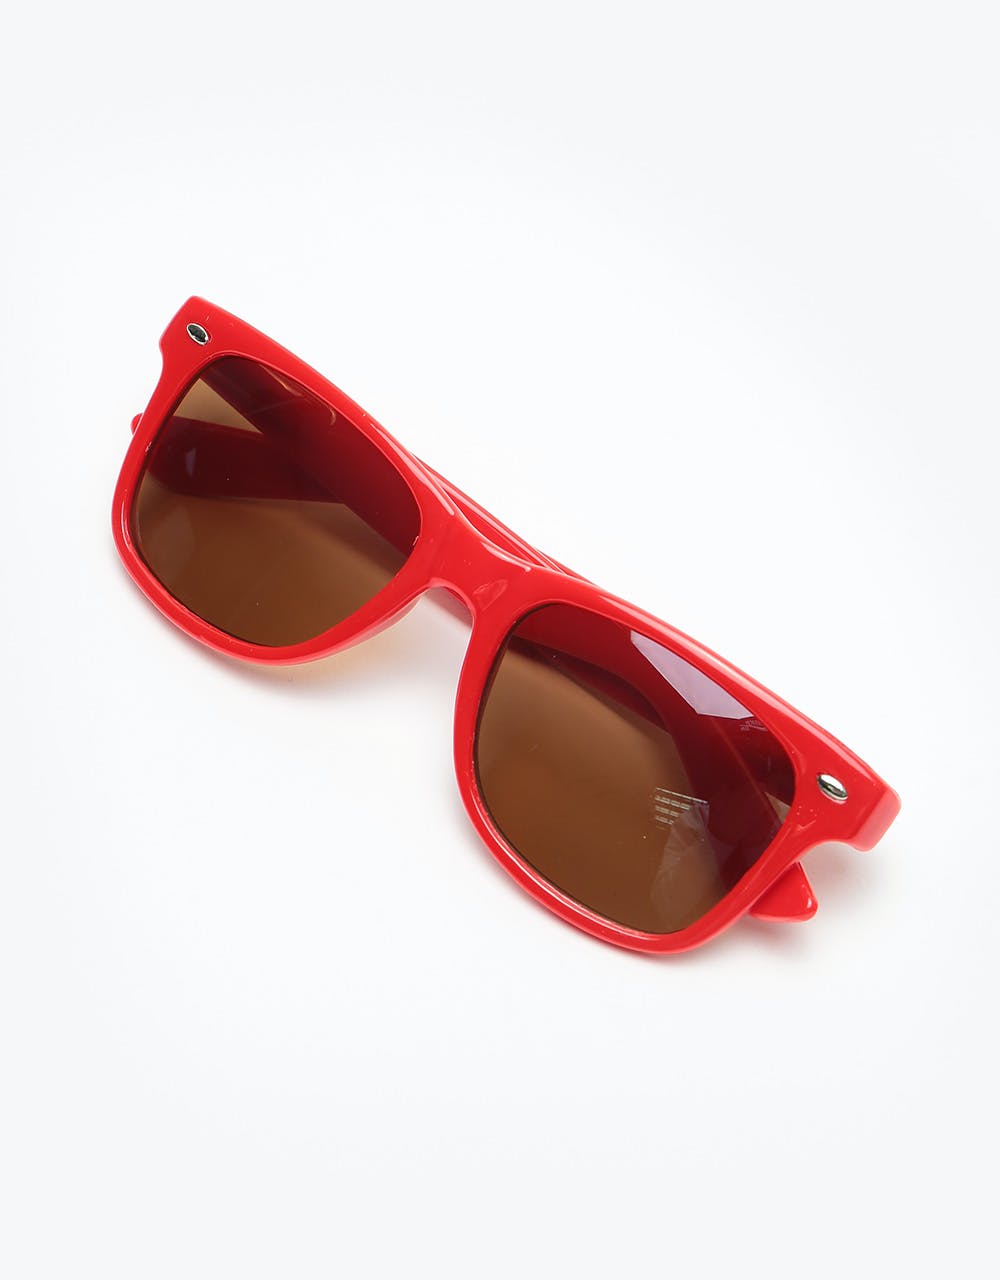 Choclate Chunk Sunglasses - Red